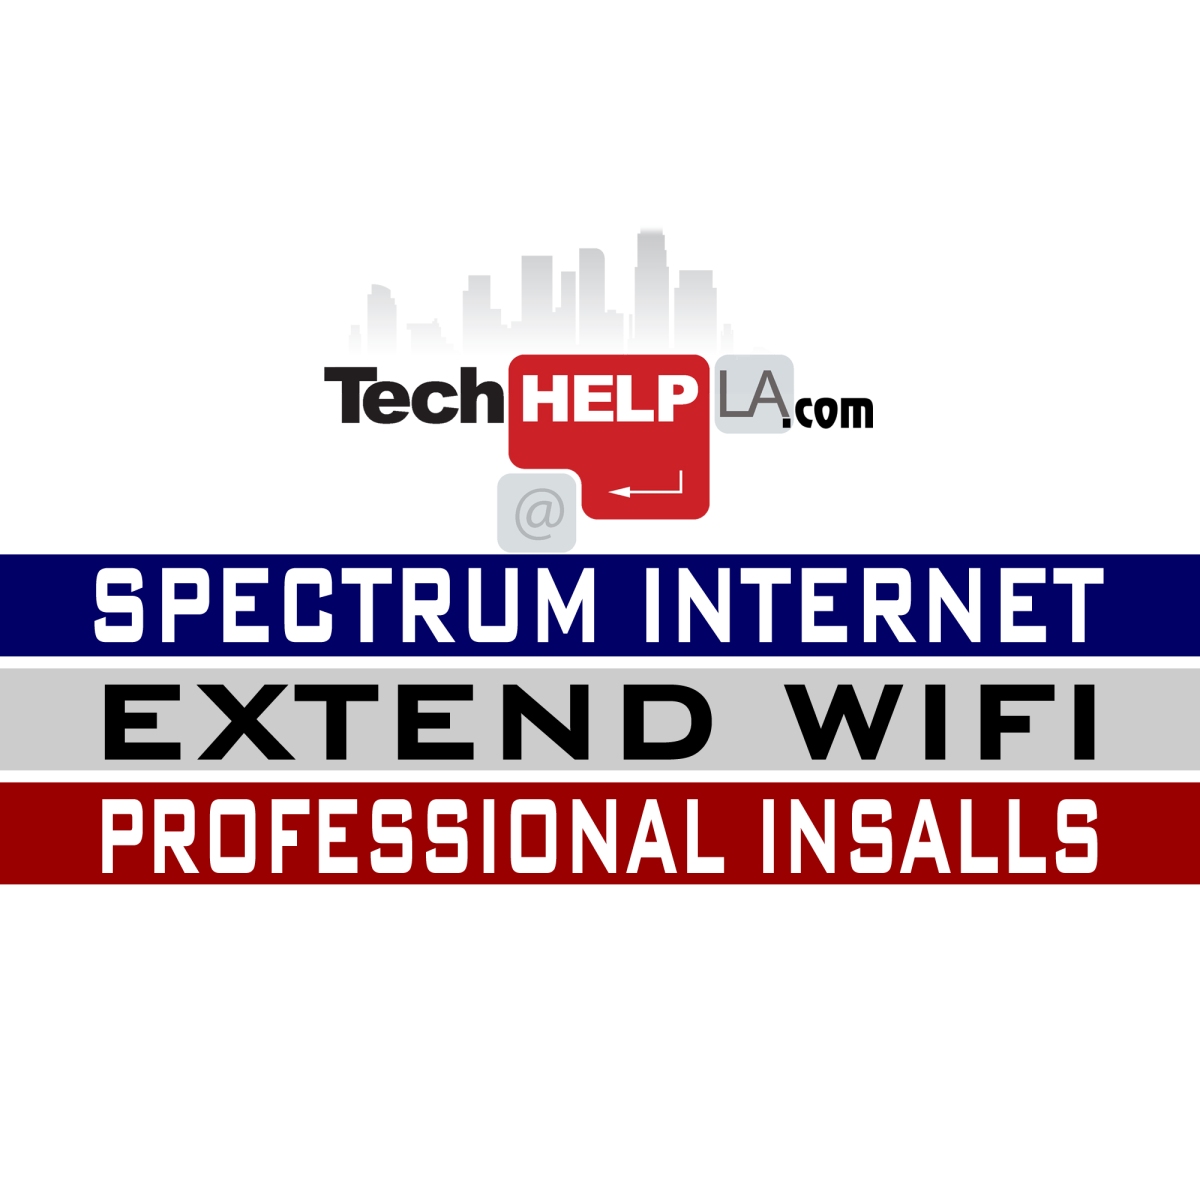 Spectrum Internet Support Los Angeles - Tech Help LA